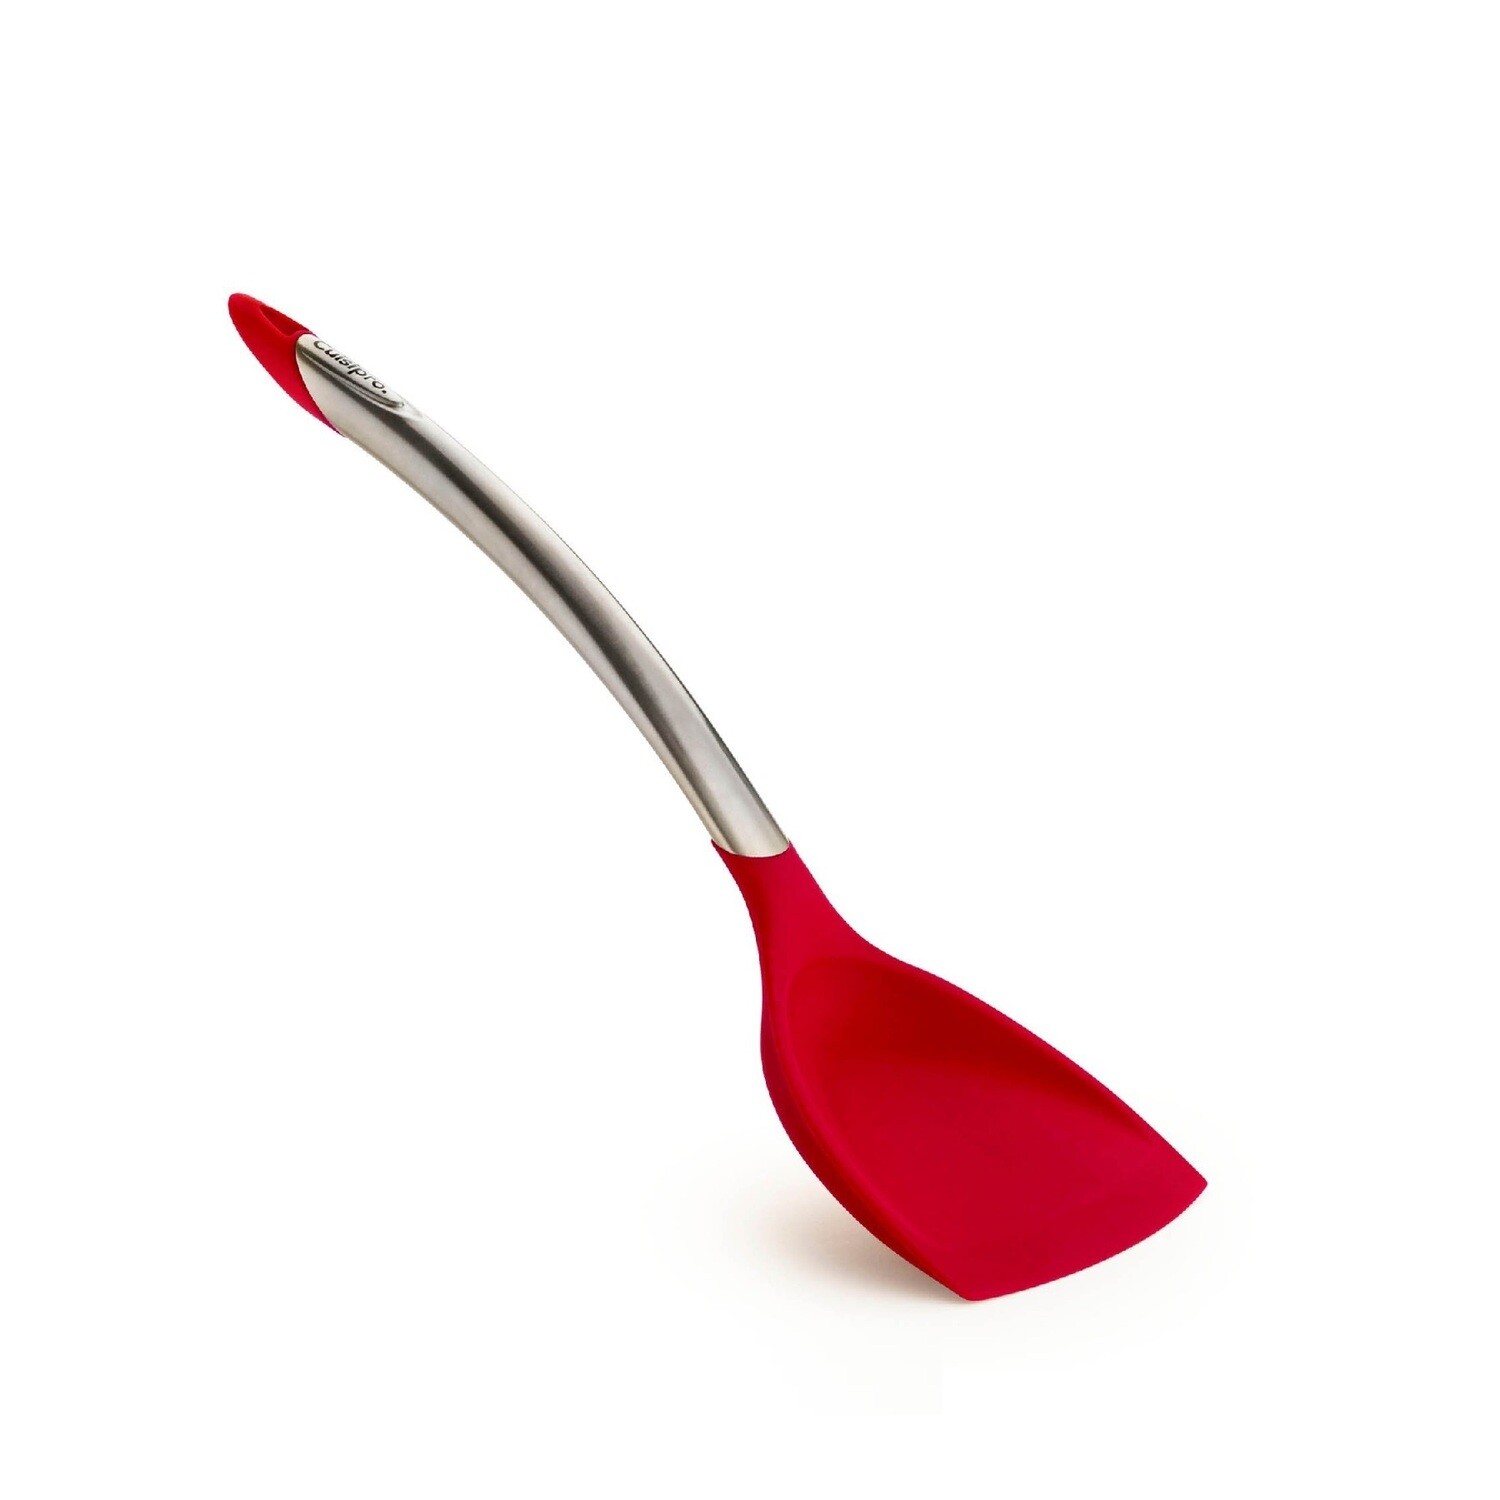 CUISIPRO 'silicone tools' wokspatel 32cm rvs/silicone rood  PROMO 22,50 -20%